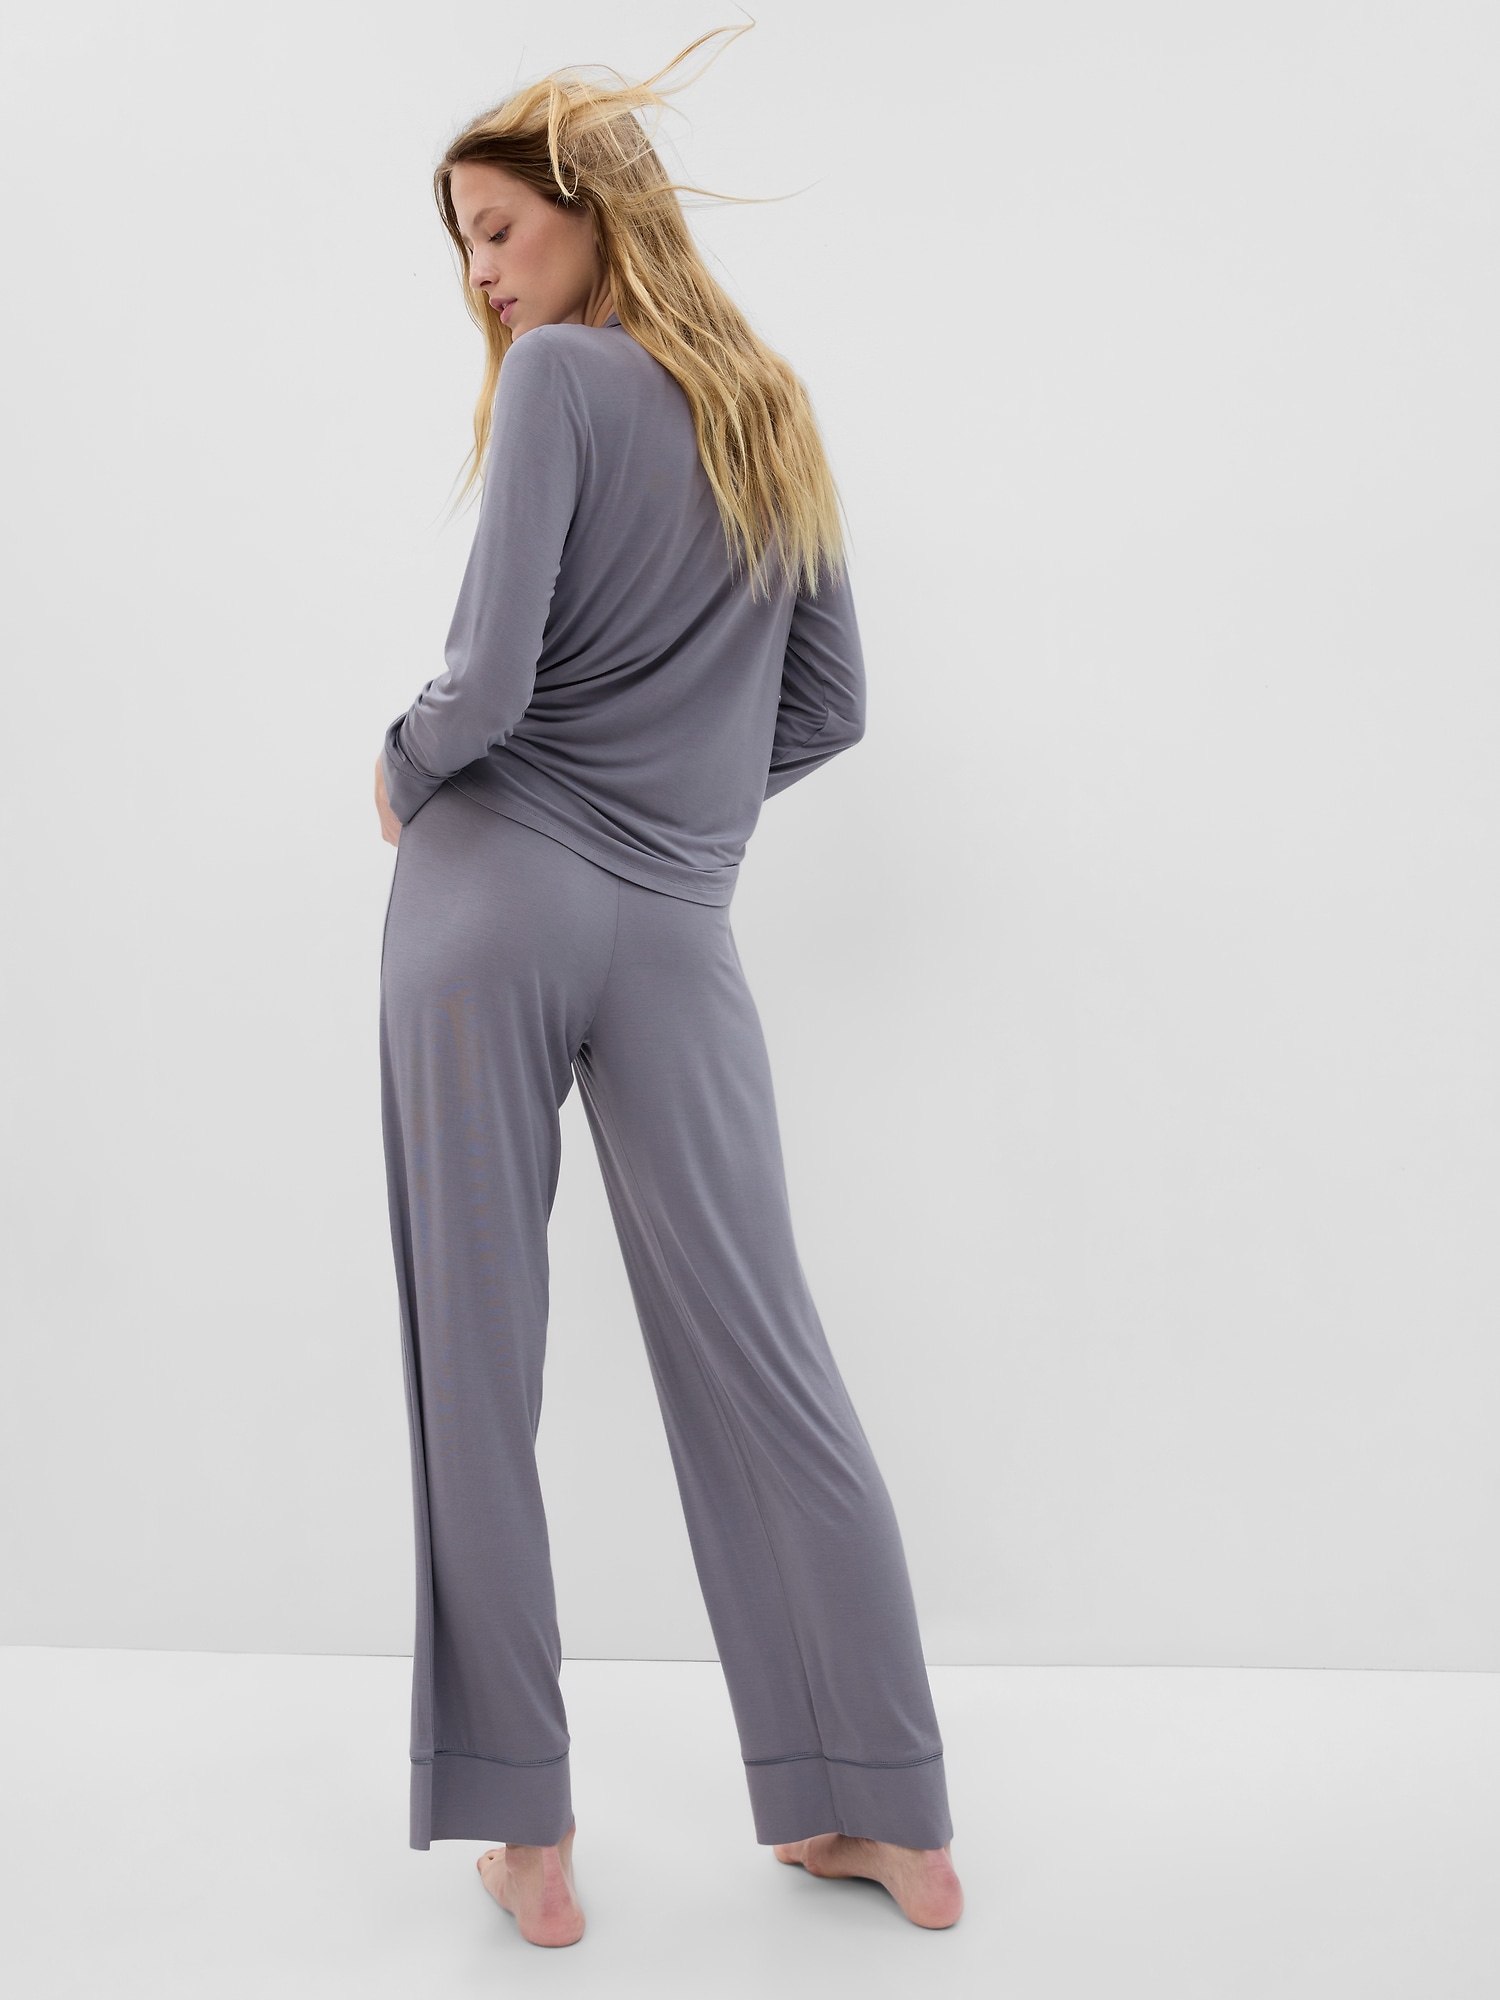 TENCEL™ Modal Women's Pyjamas